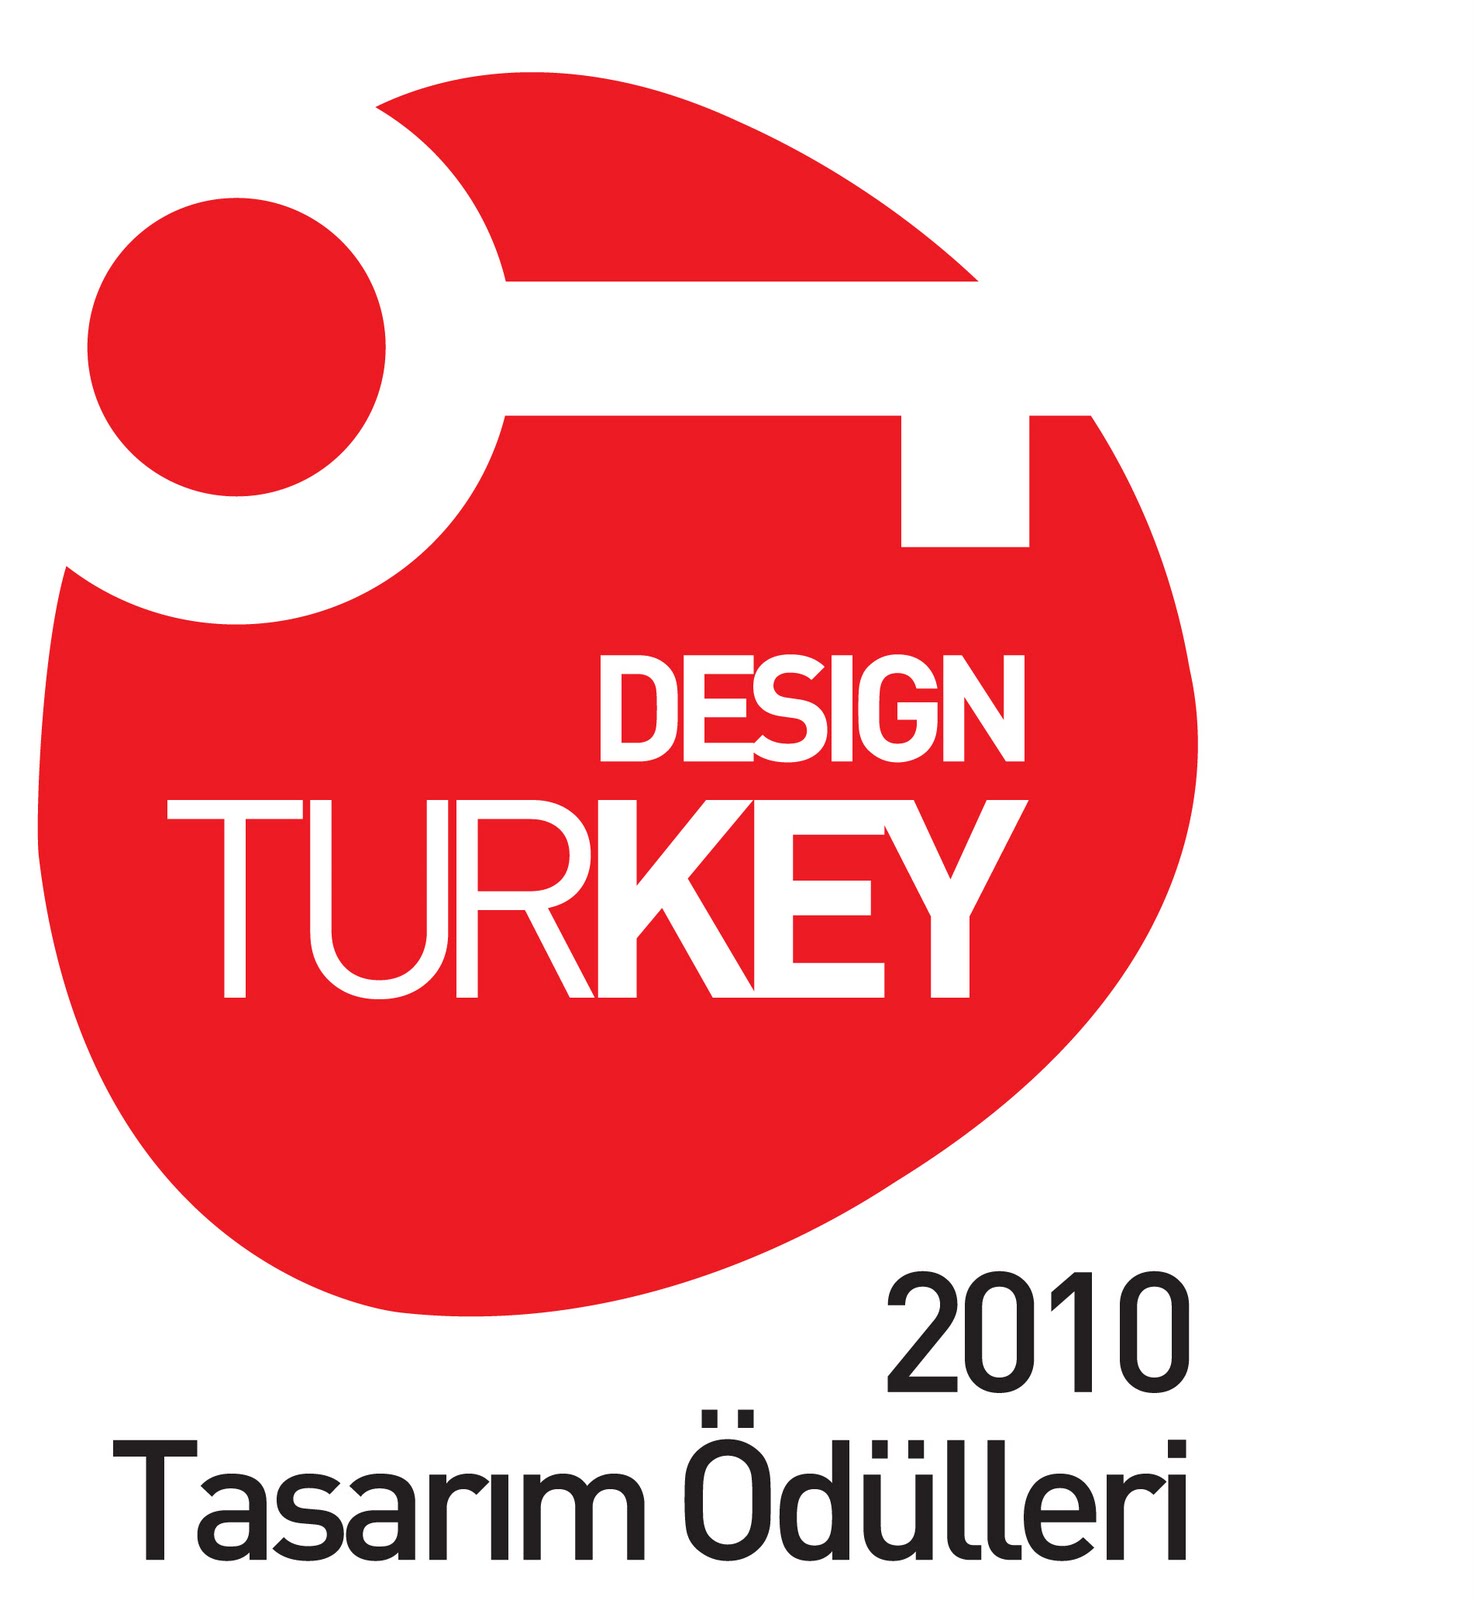 Turkey co. Турция. Design. Турция 2010. Made in Turkey Design.